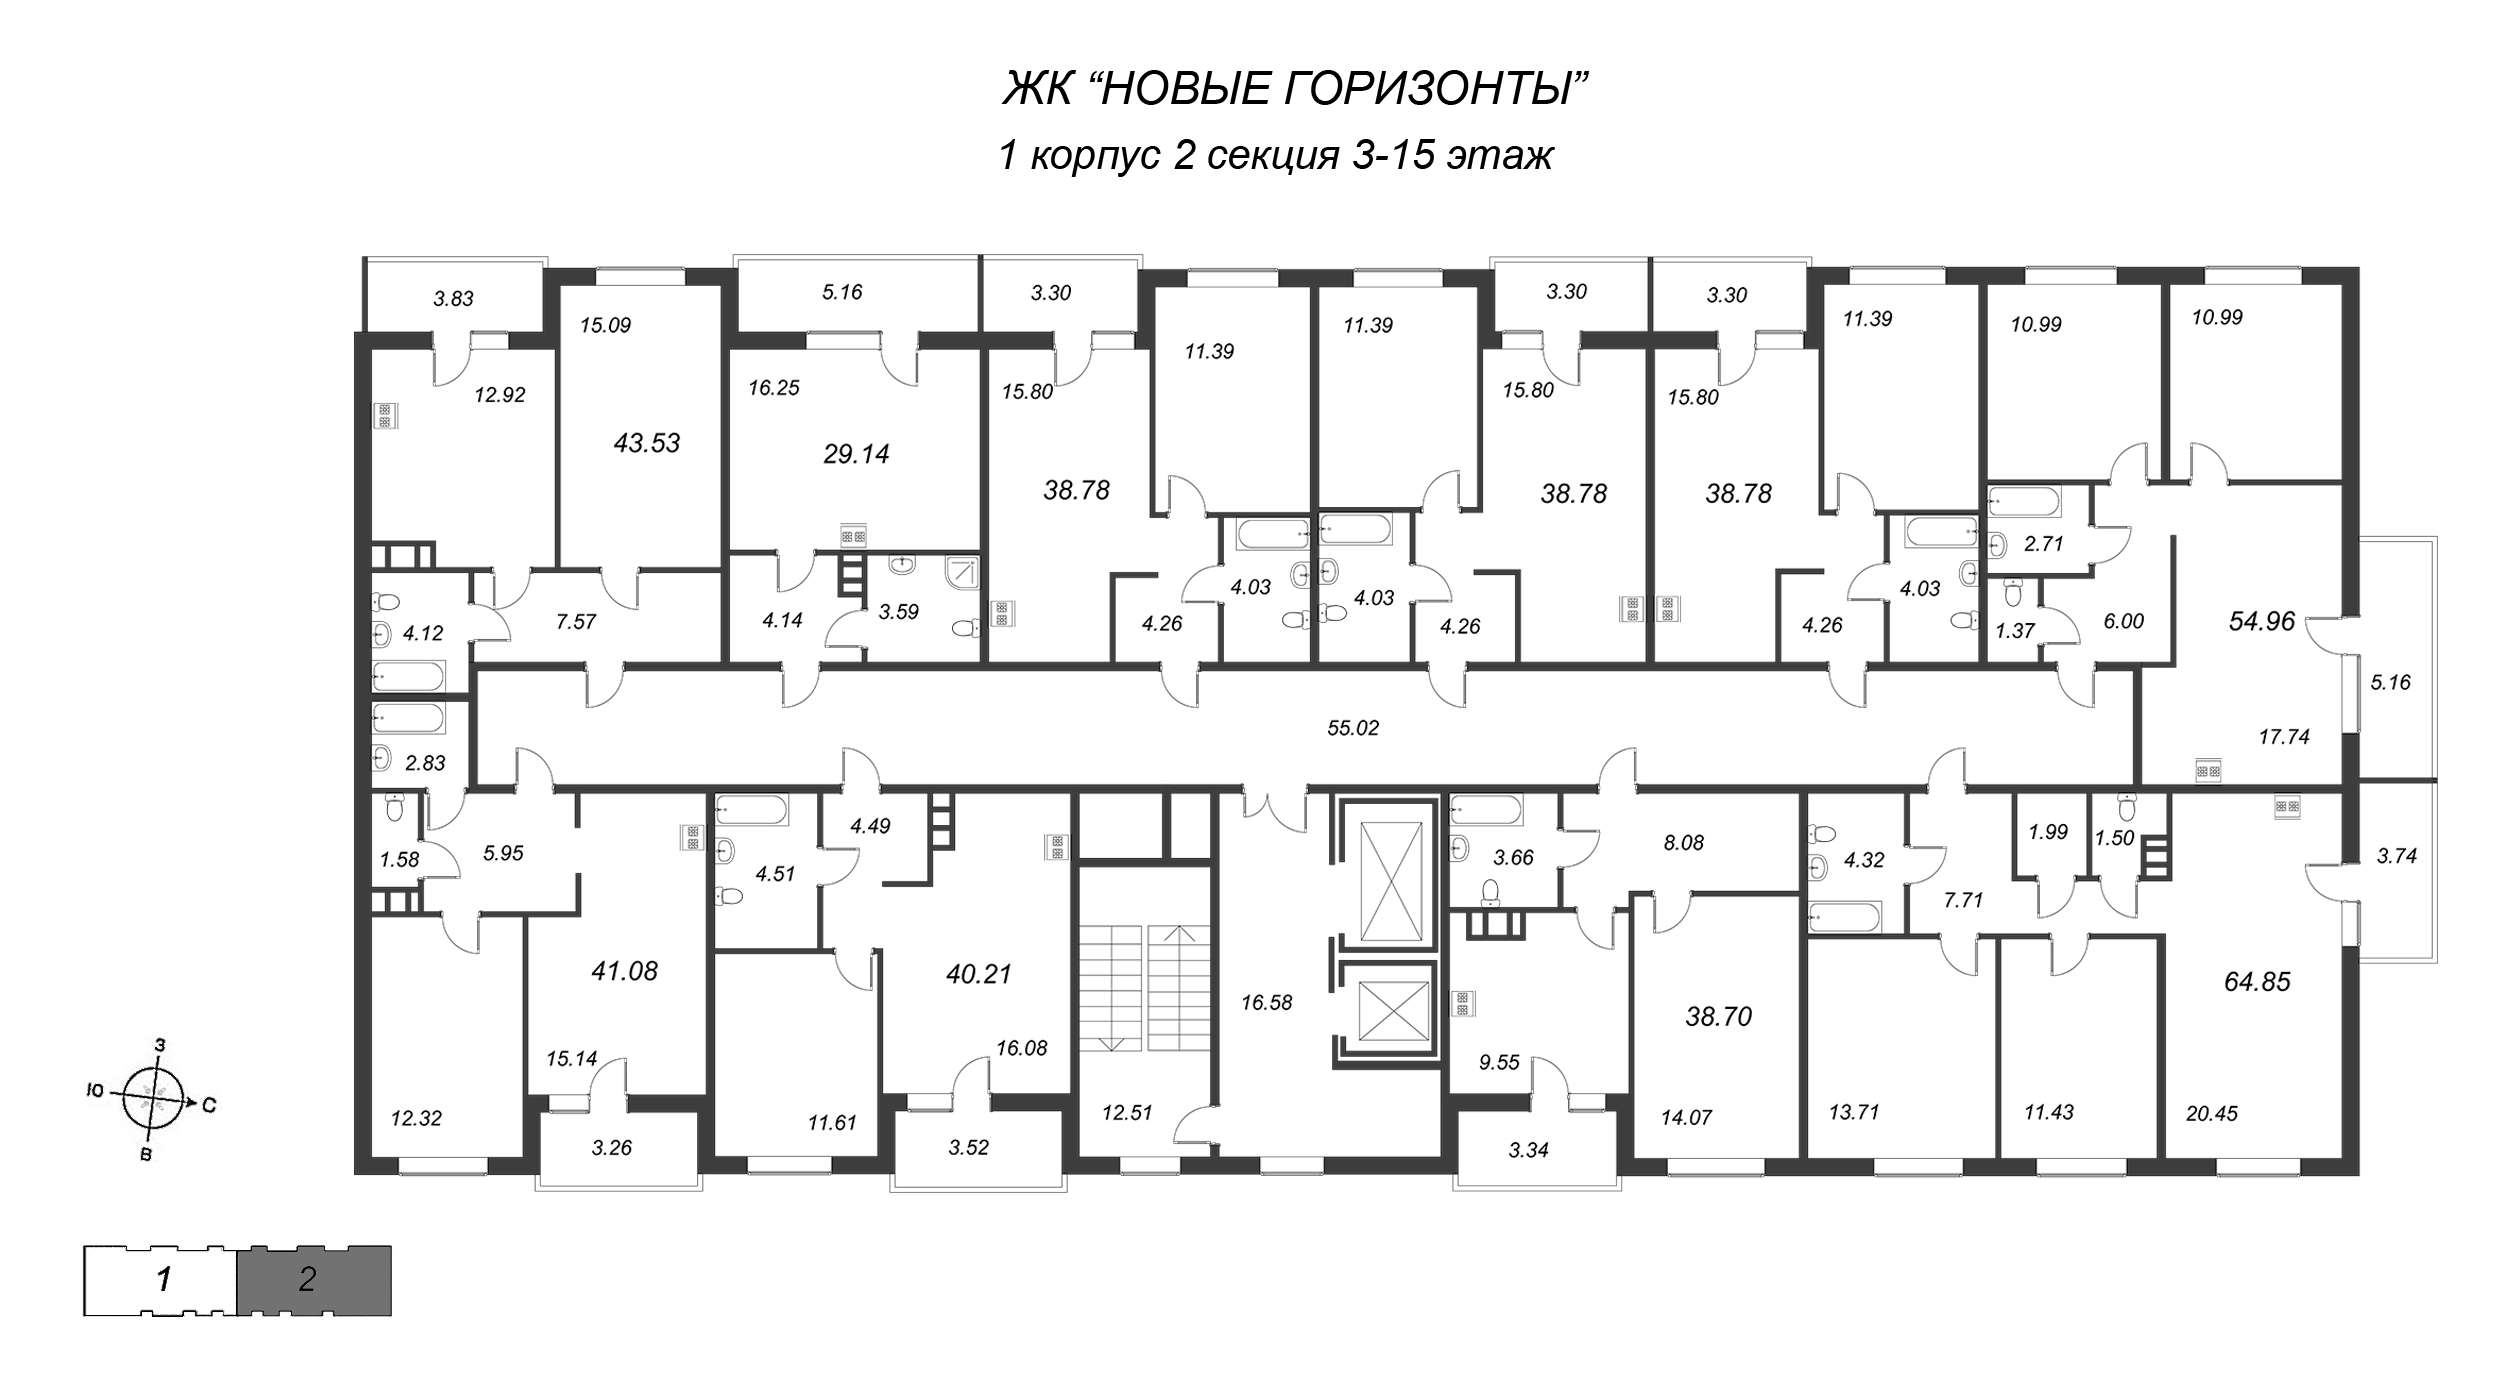 3-комнатная (Евро) квартира, 61.11 м² - планировка этажа